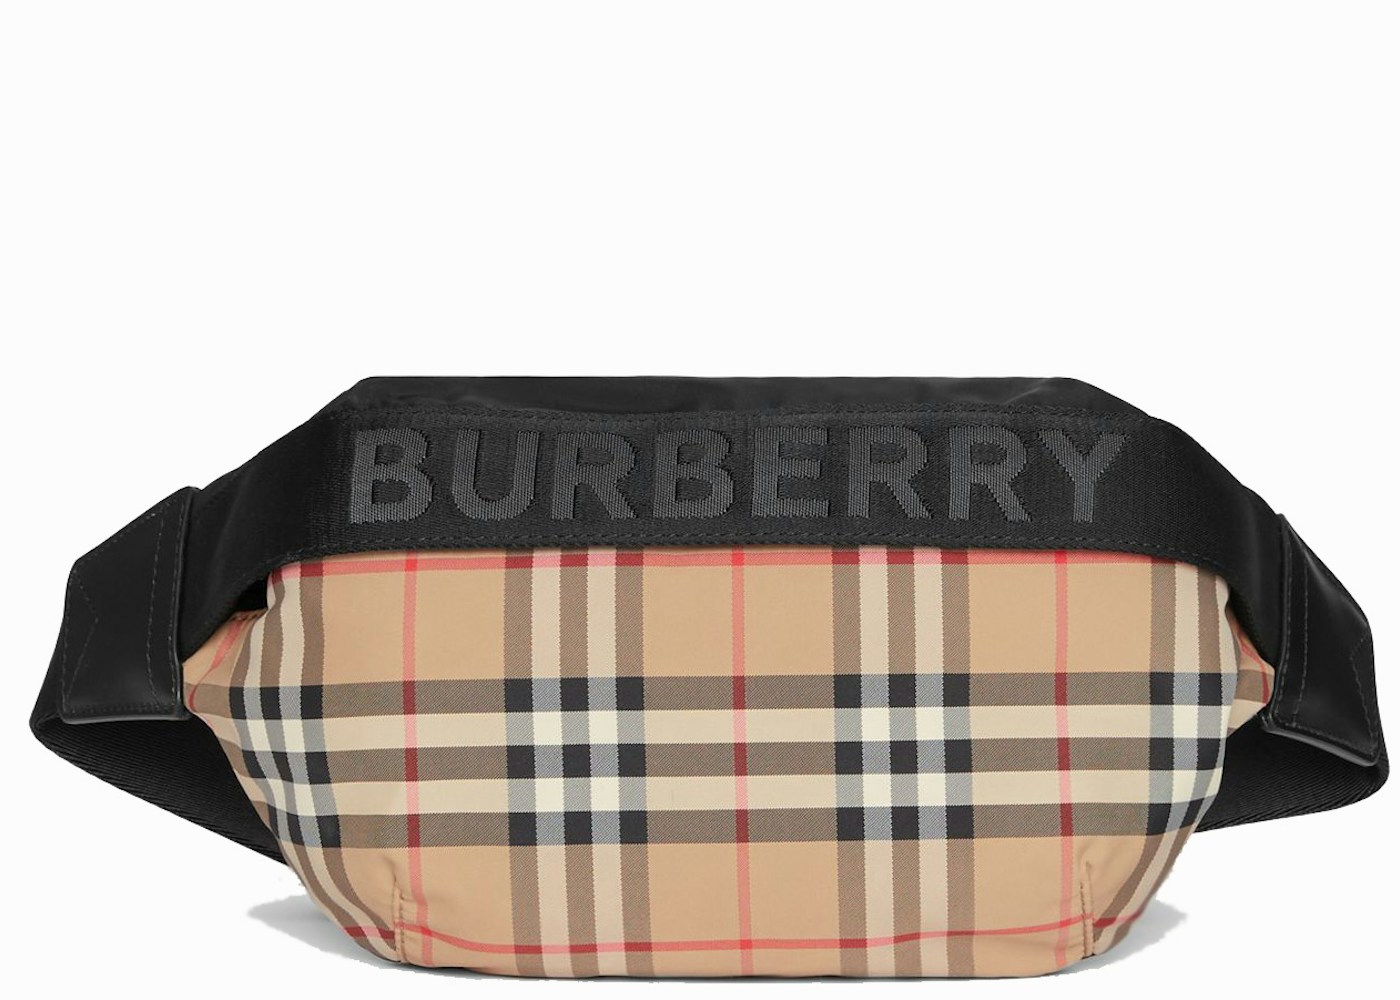 Burberry Bag Vintage Check Medium Beige/Black Nylon/Leather with